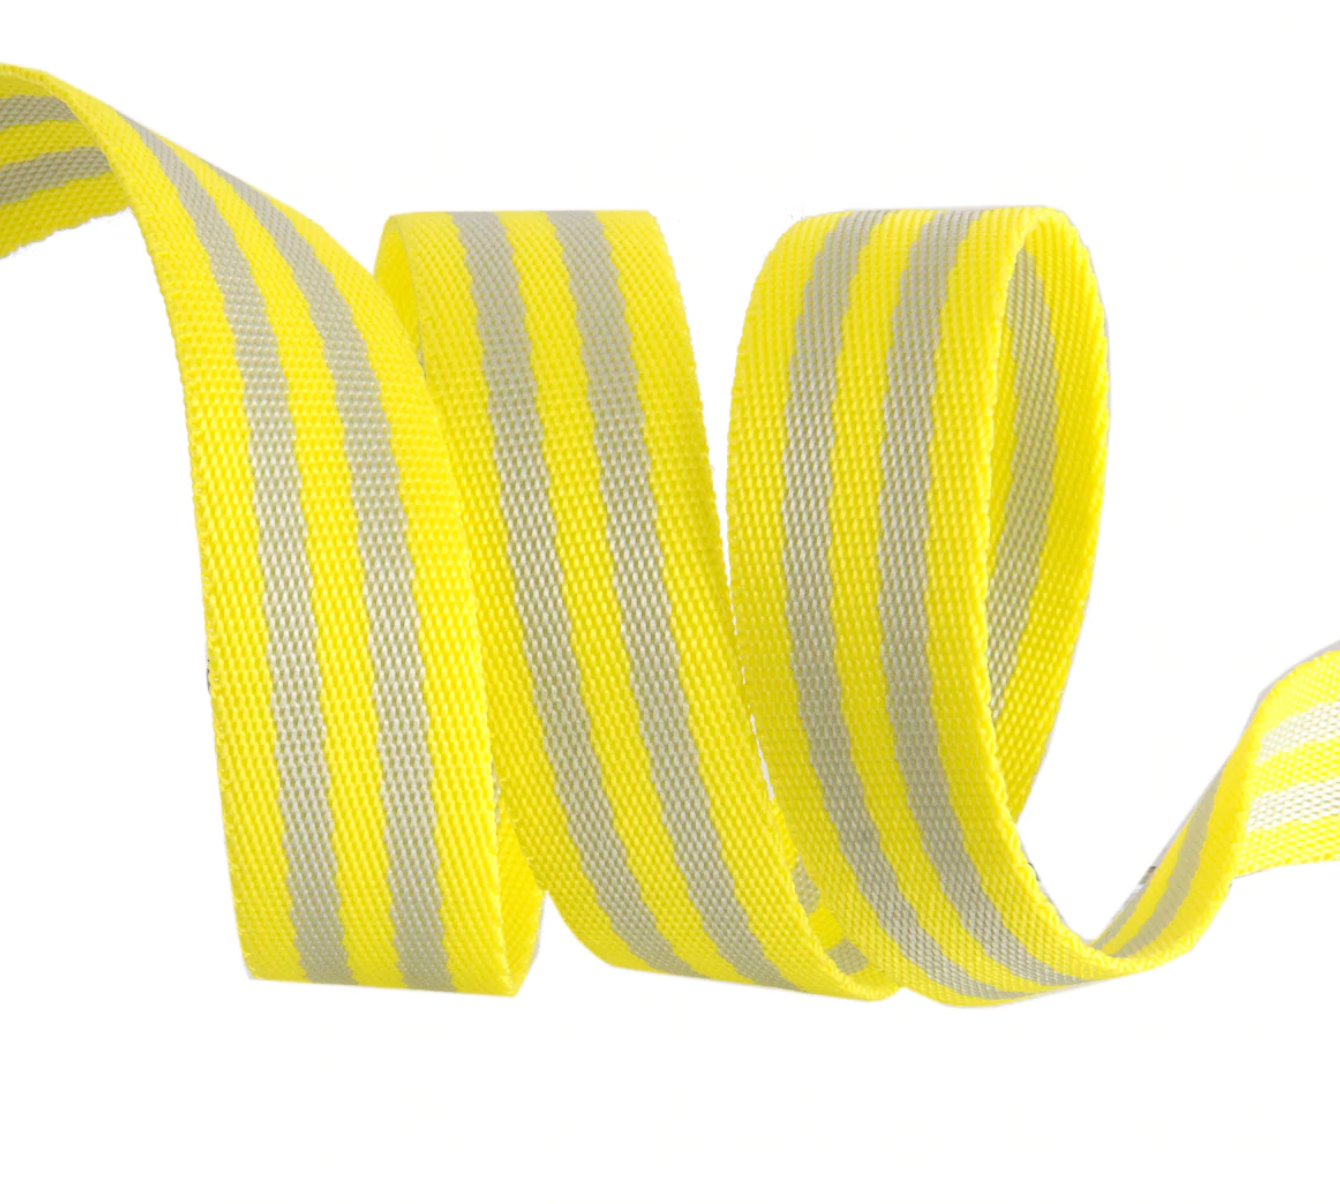 Tula Pink Nylon Webbing Grey/Neon Yellow 1" TKS-91/1" Col 03 Priced per yard